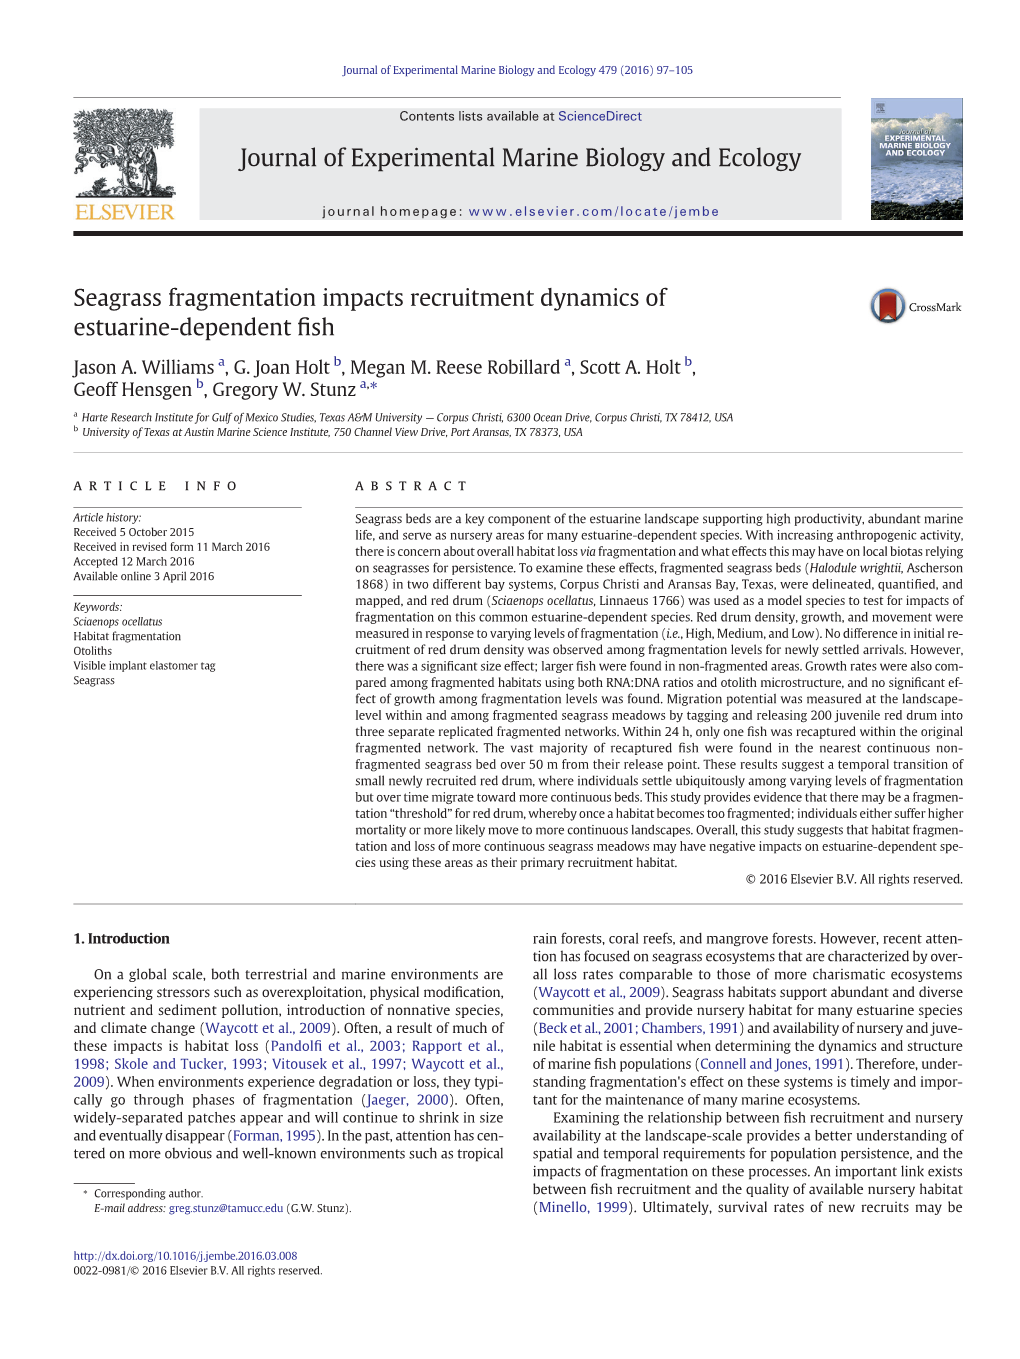 Seagrass Fragmentation Impacts Recruitment Dynamics of Estuarine-Dependent ﬁsh